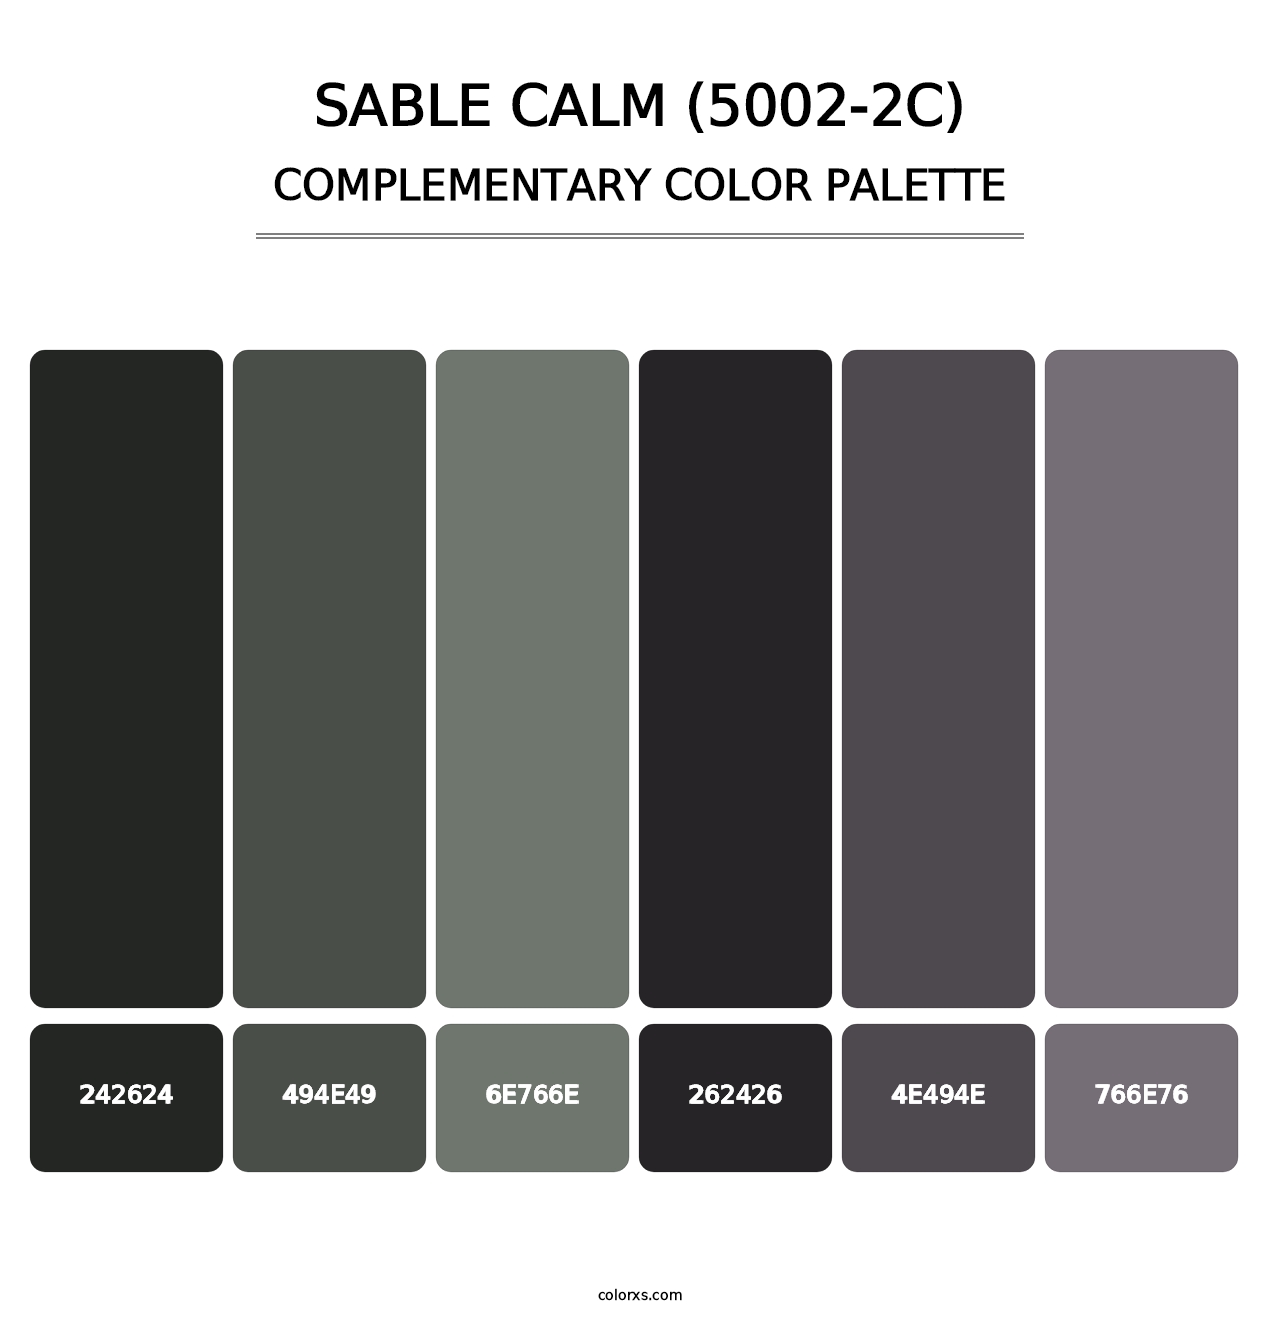 Sable Calm (5002-2C) - Complementary Color Palette